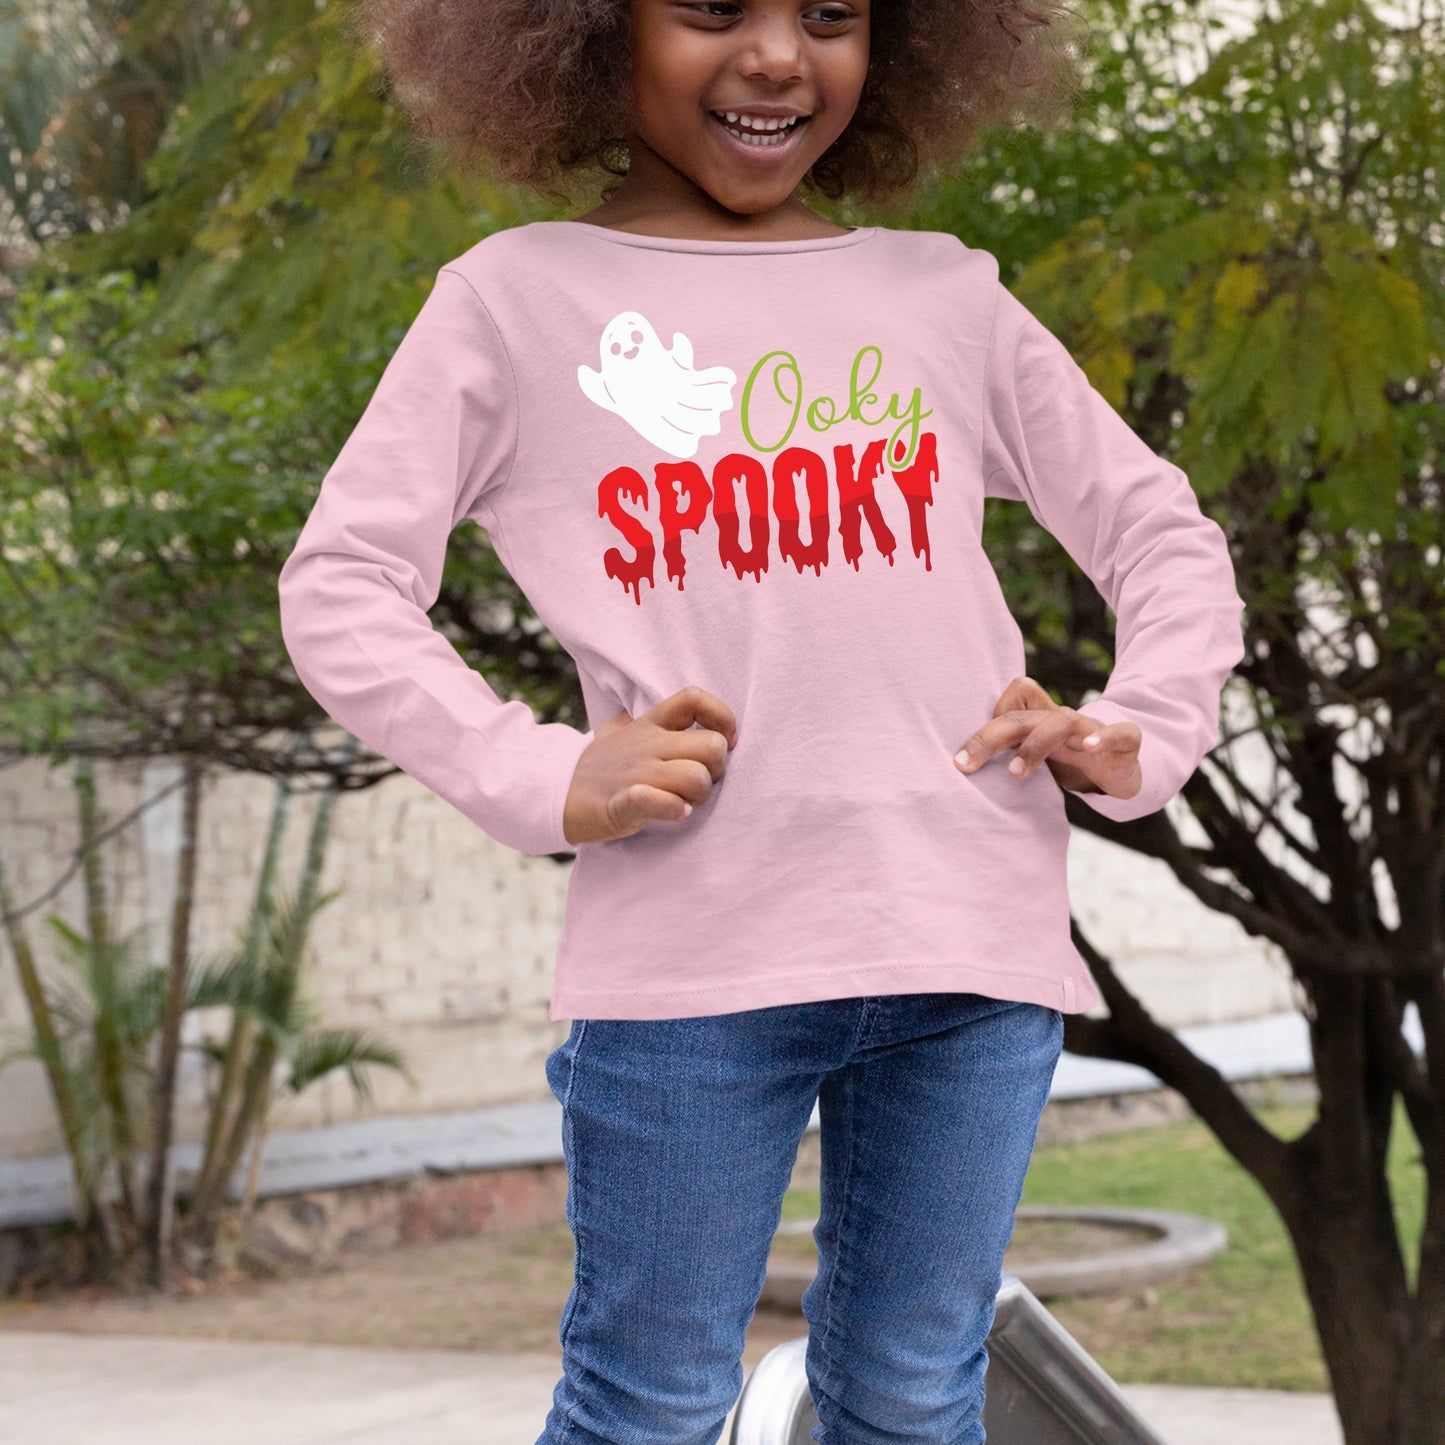 Spooky Halloween Sweatshirt, Halloween Gift Sweatshirt, Halloween Sweater, Cute Halloween Sweatshirt, Funny Halloween Sweatshirt